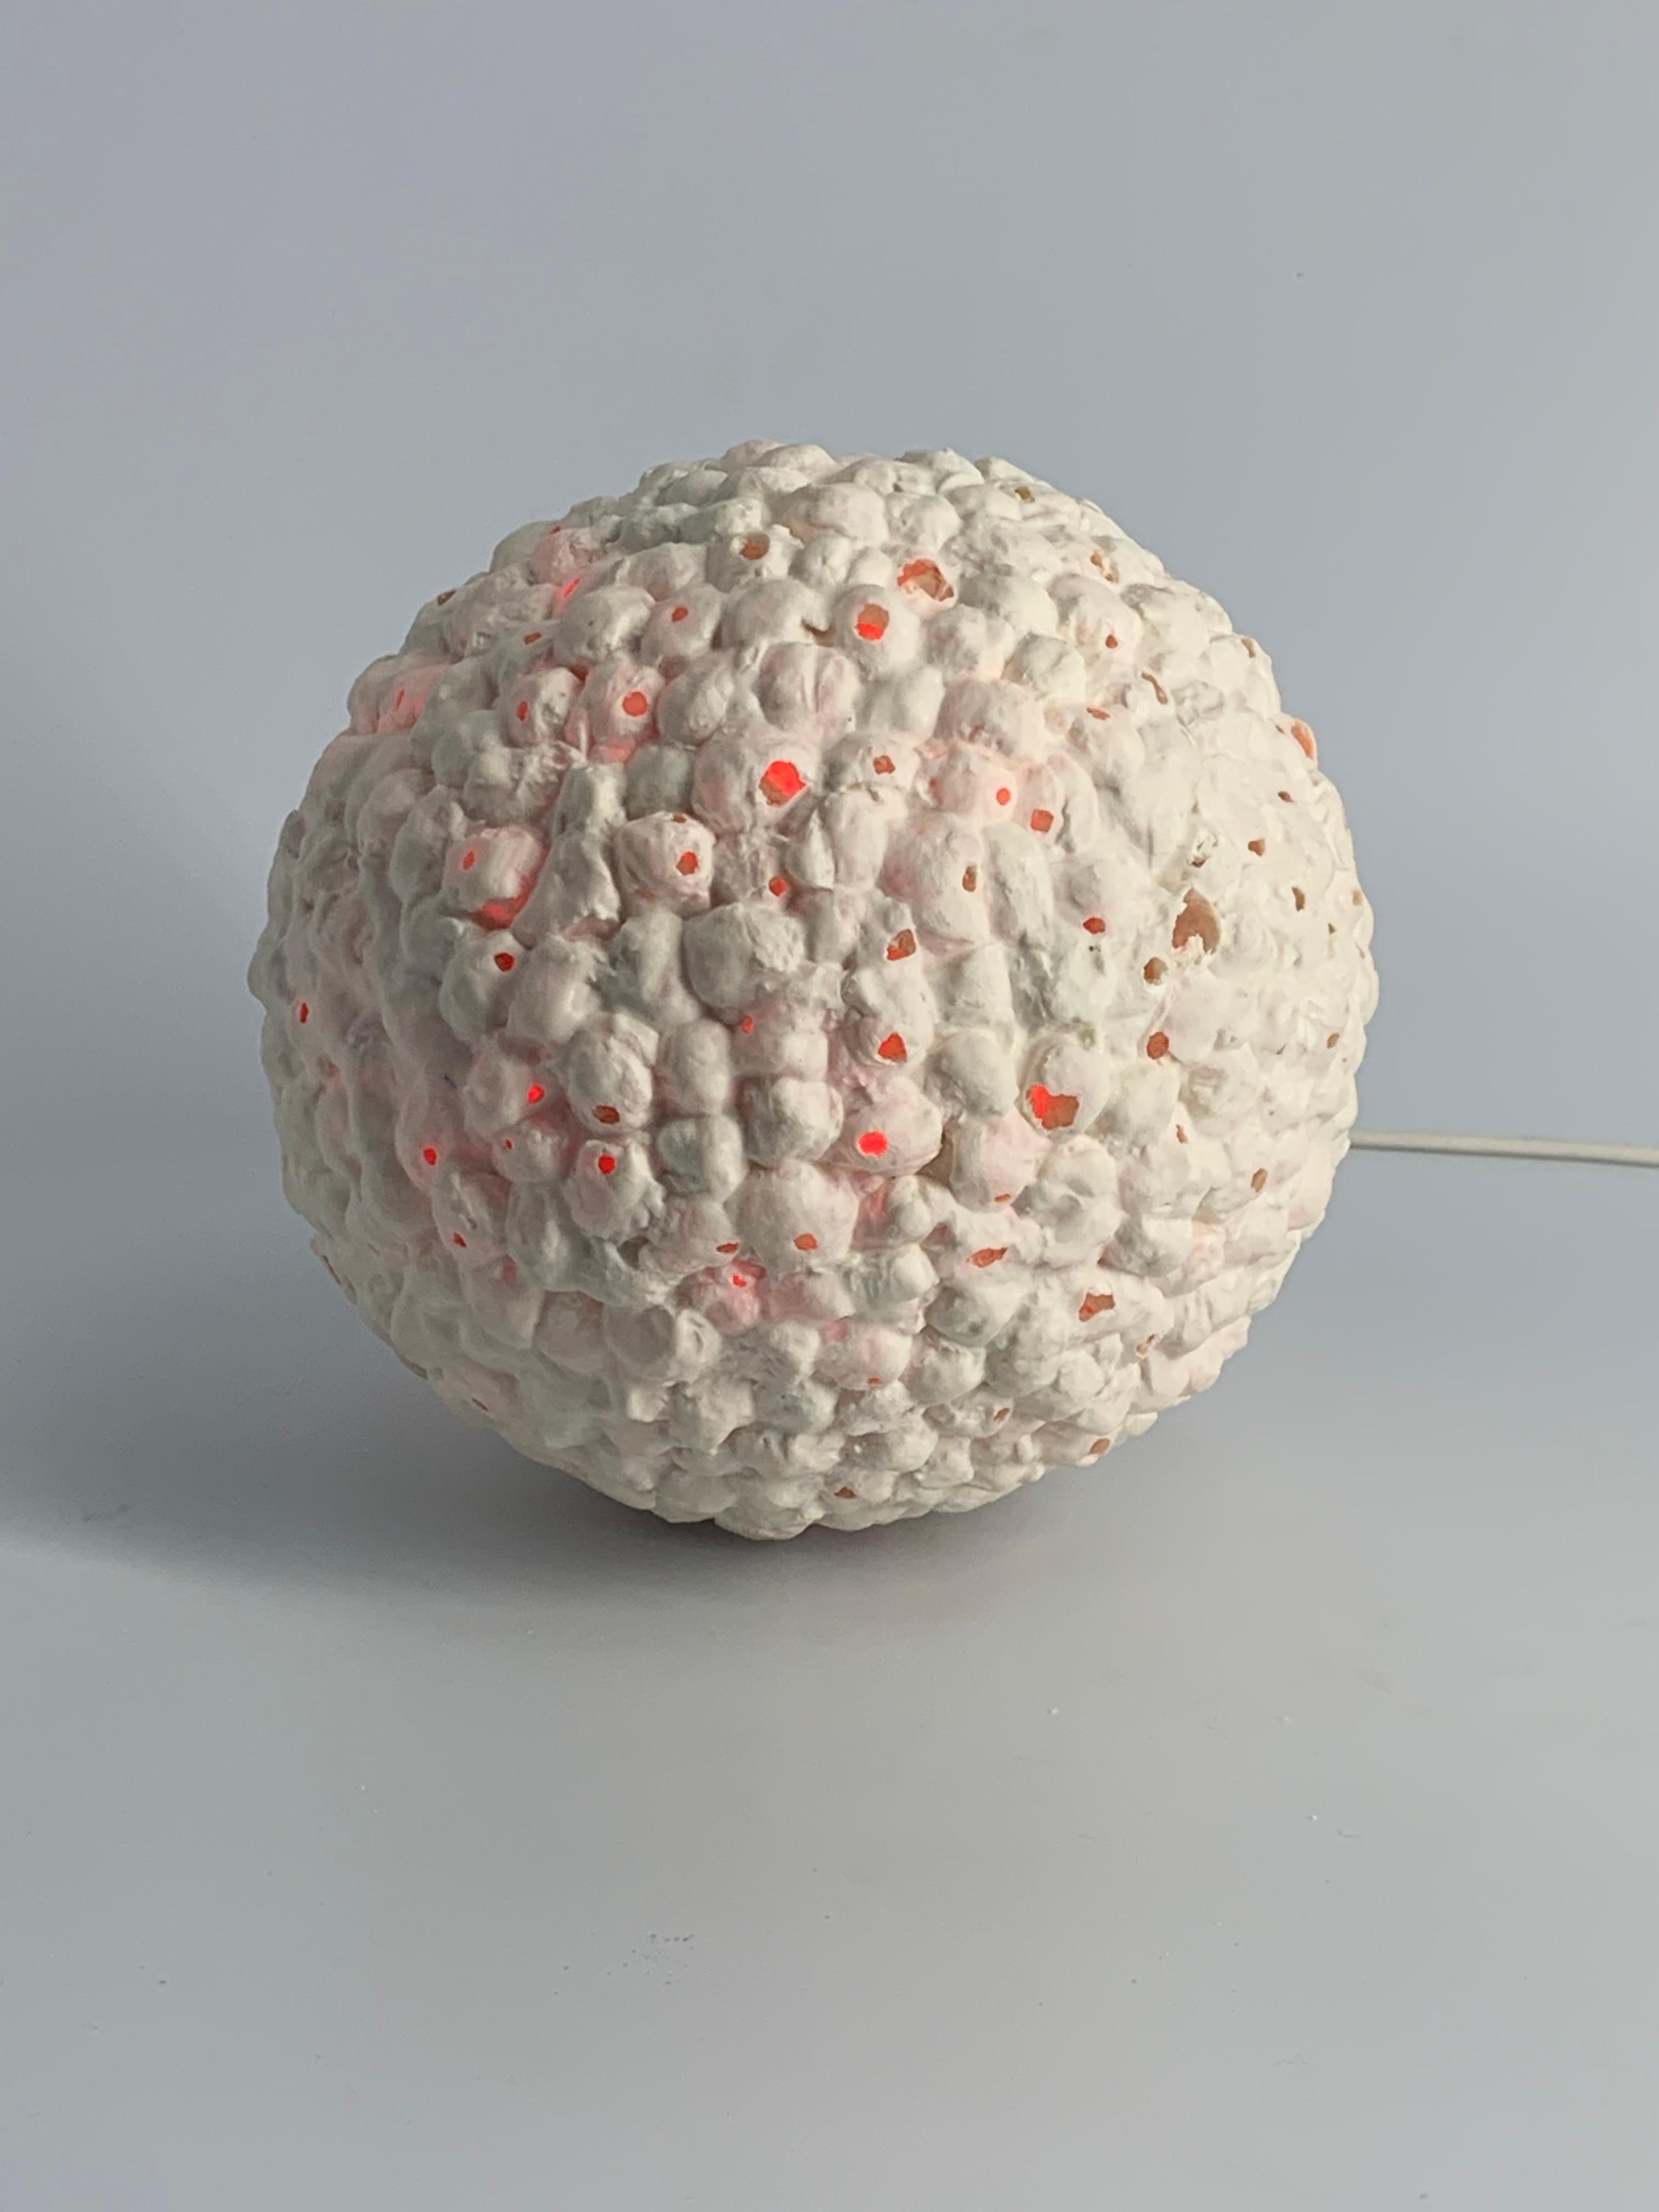 Ball with red light - Minimalist Sculpture by Olesia Dvorak-Galik